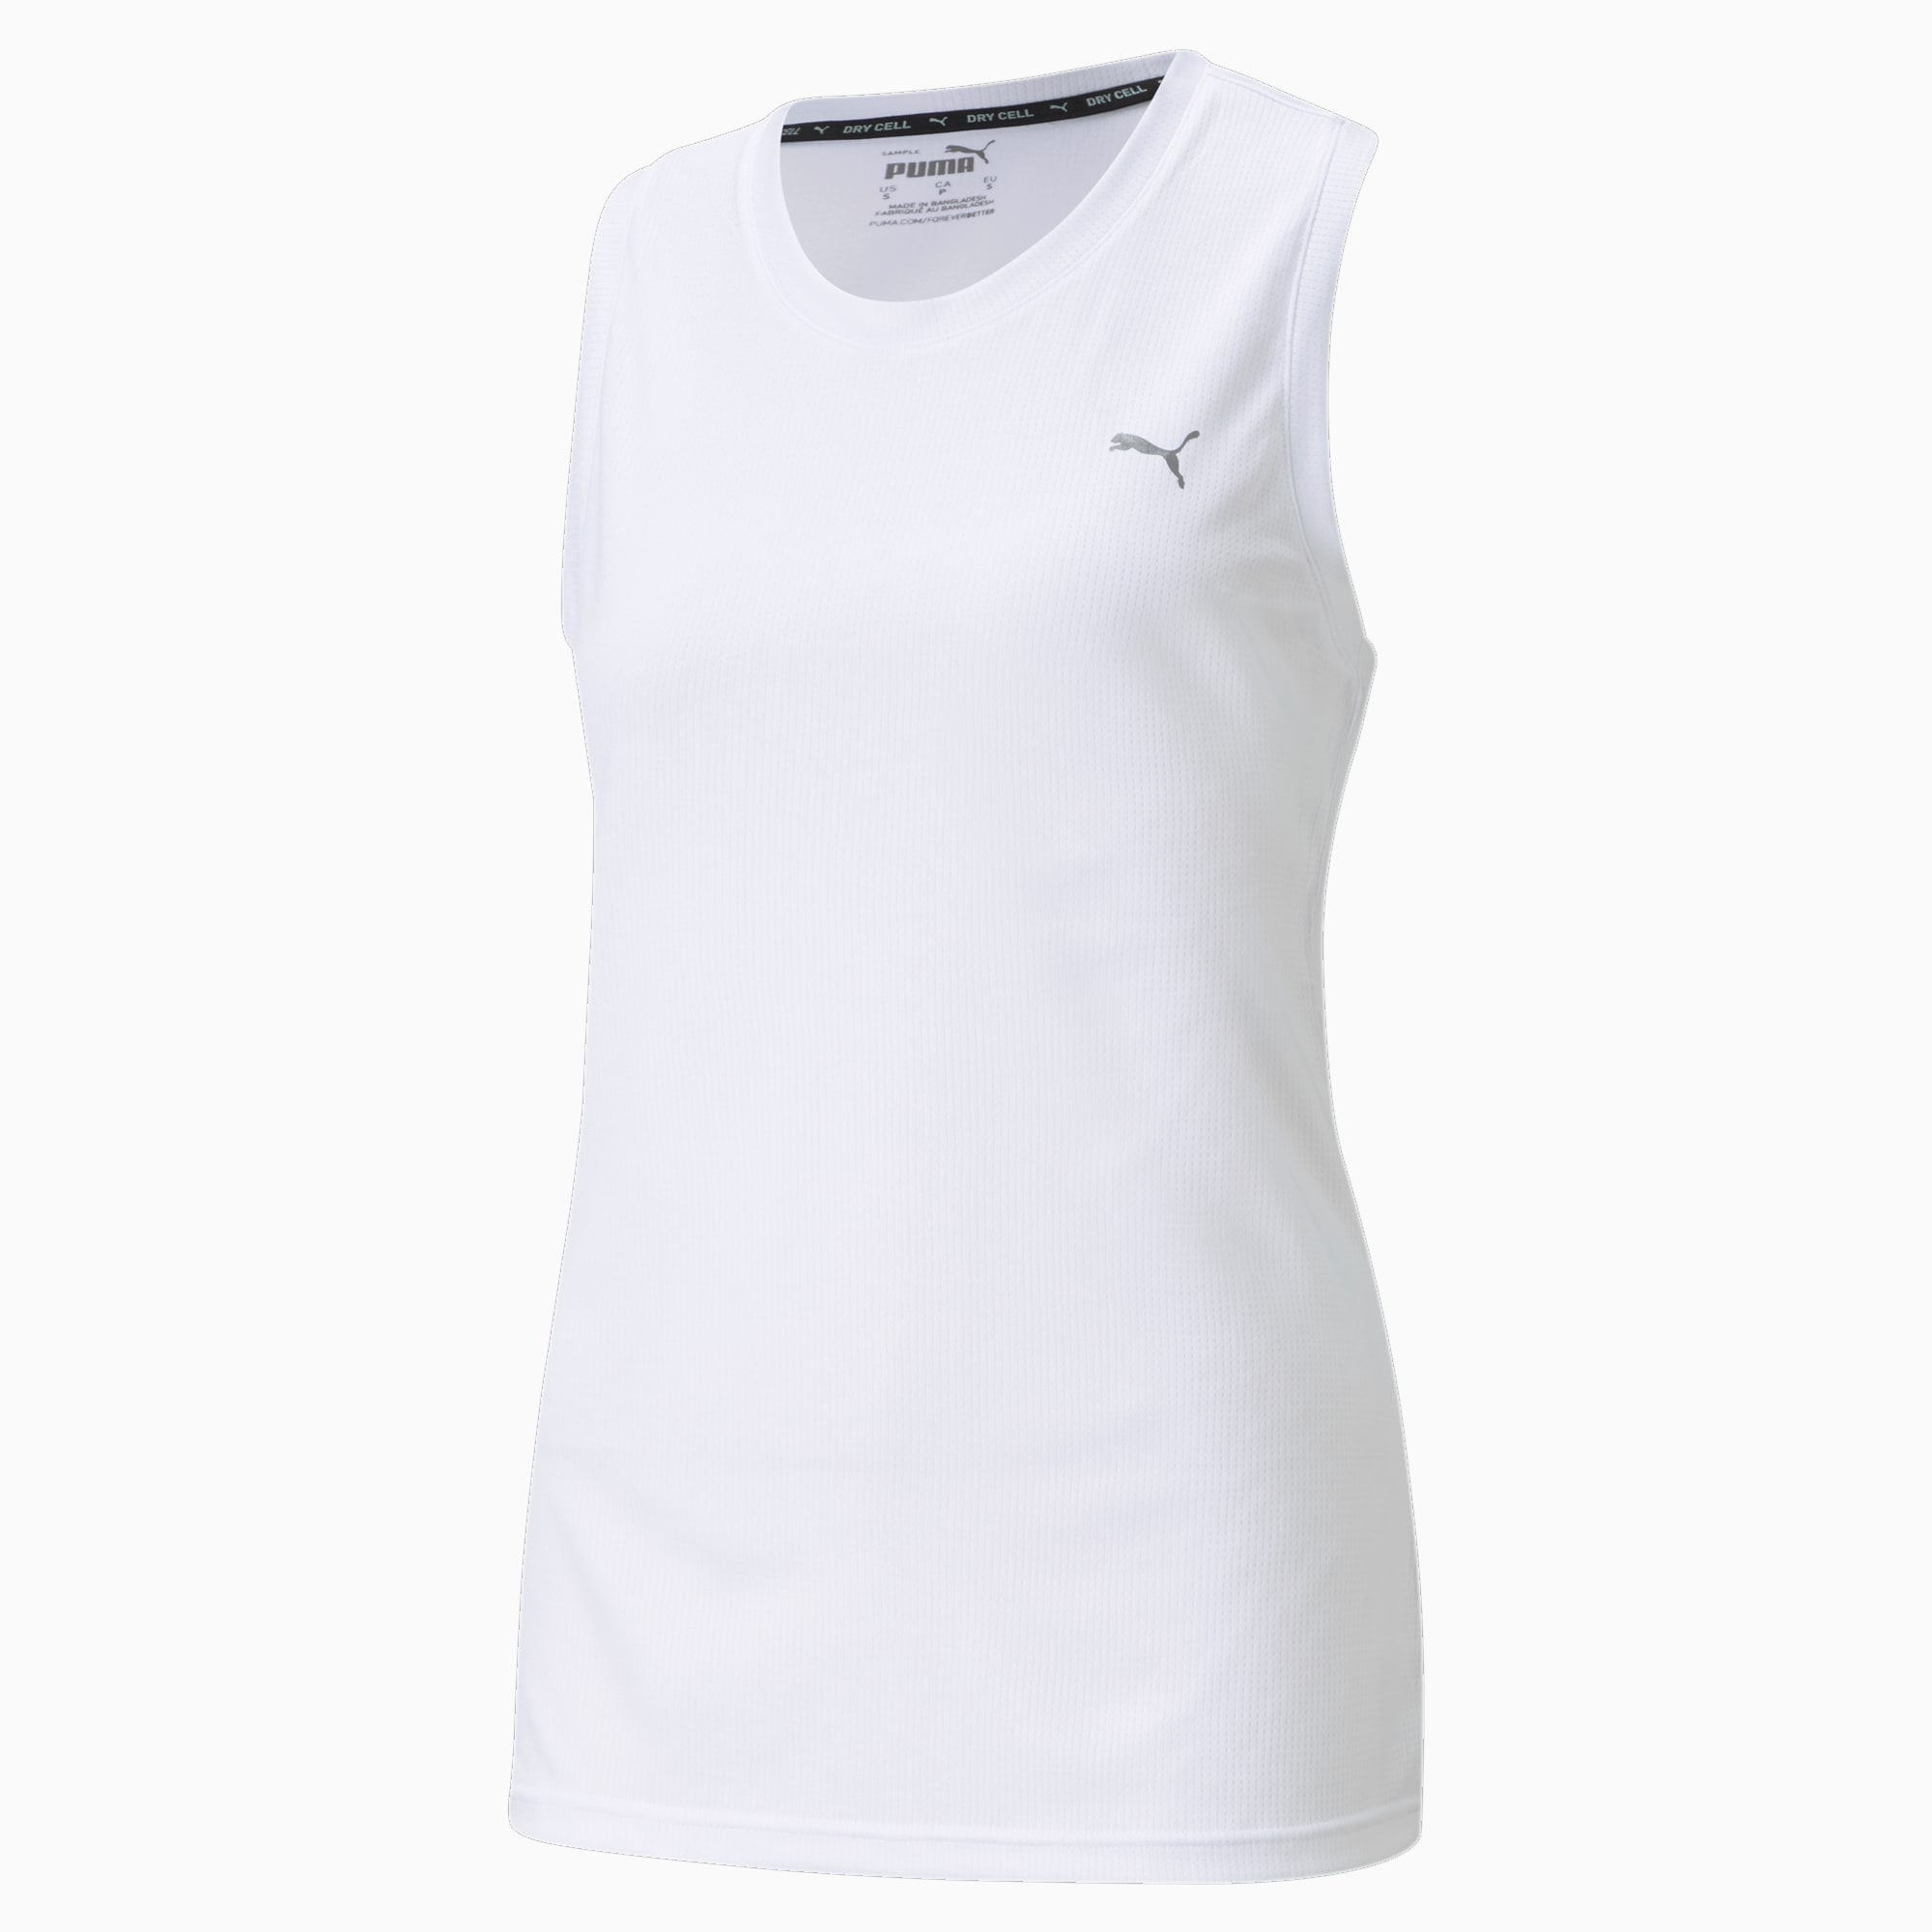 PUMA Performance Women's Training Tank Top Shirt, White, Size XXL, Clothing